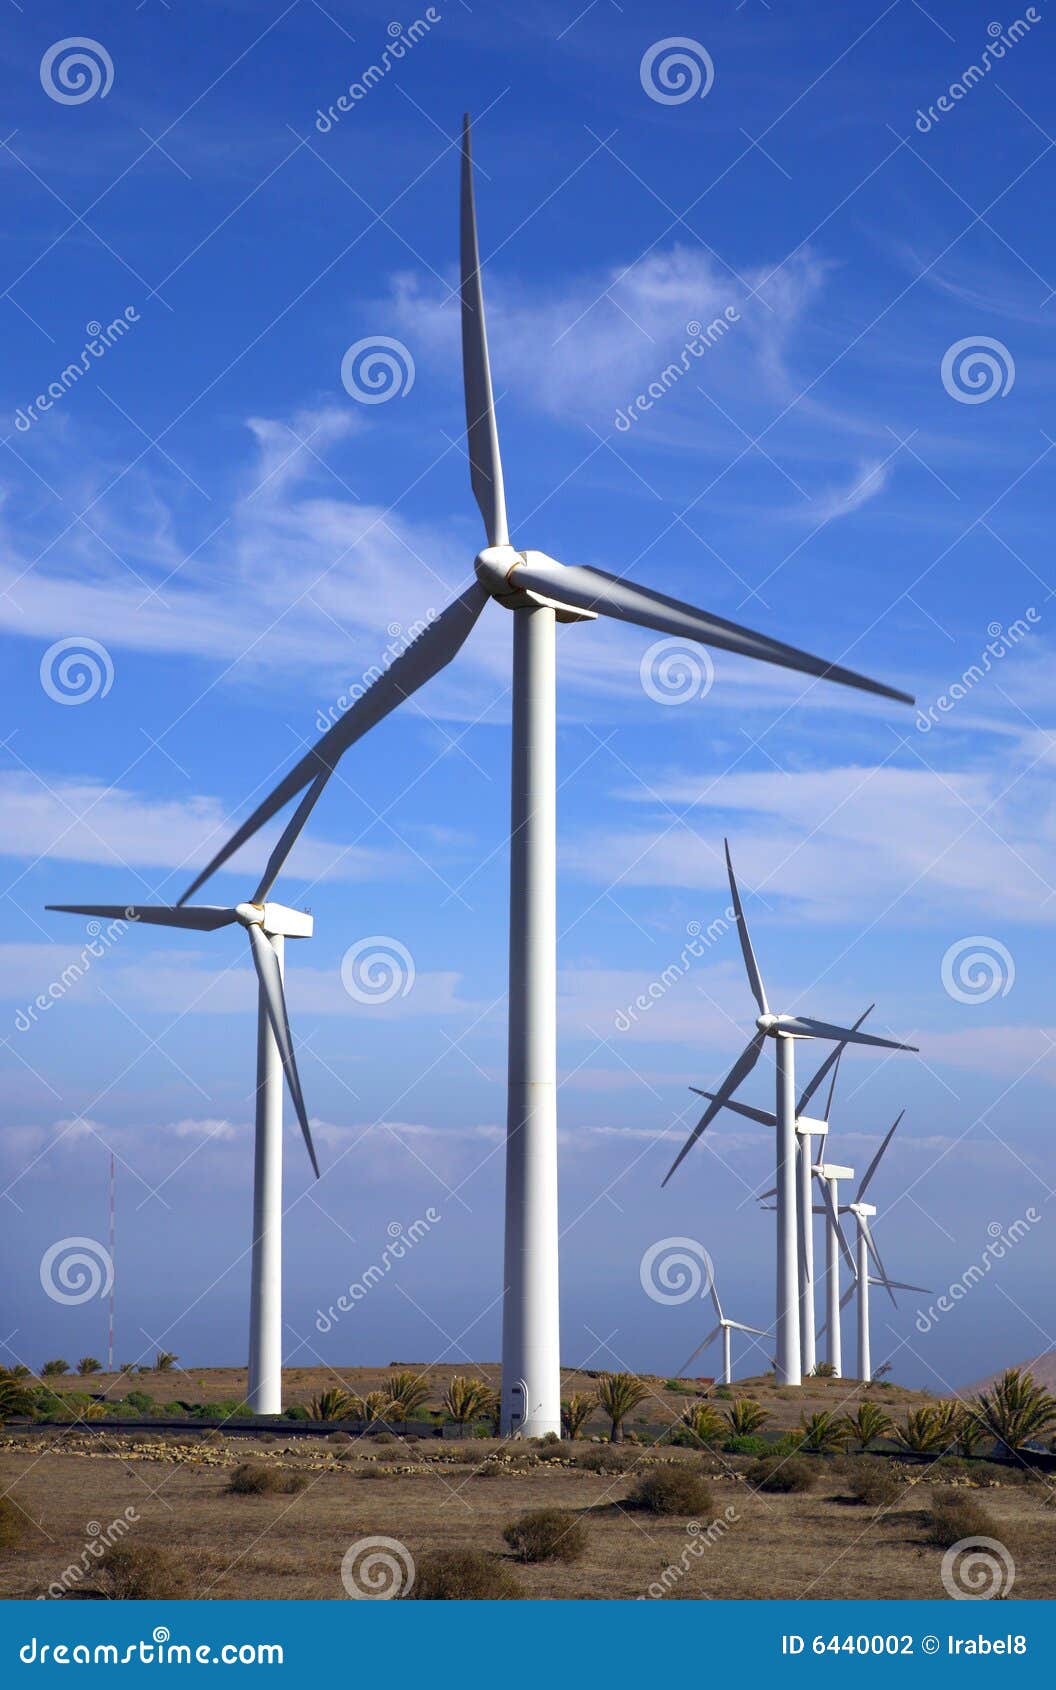 eolic - wind turbine